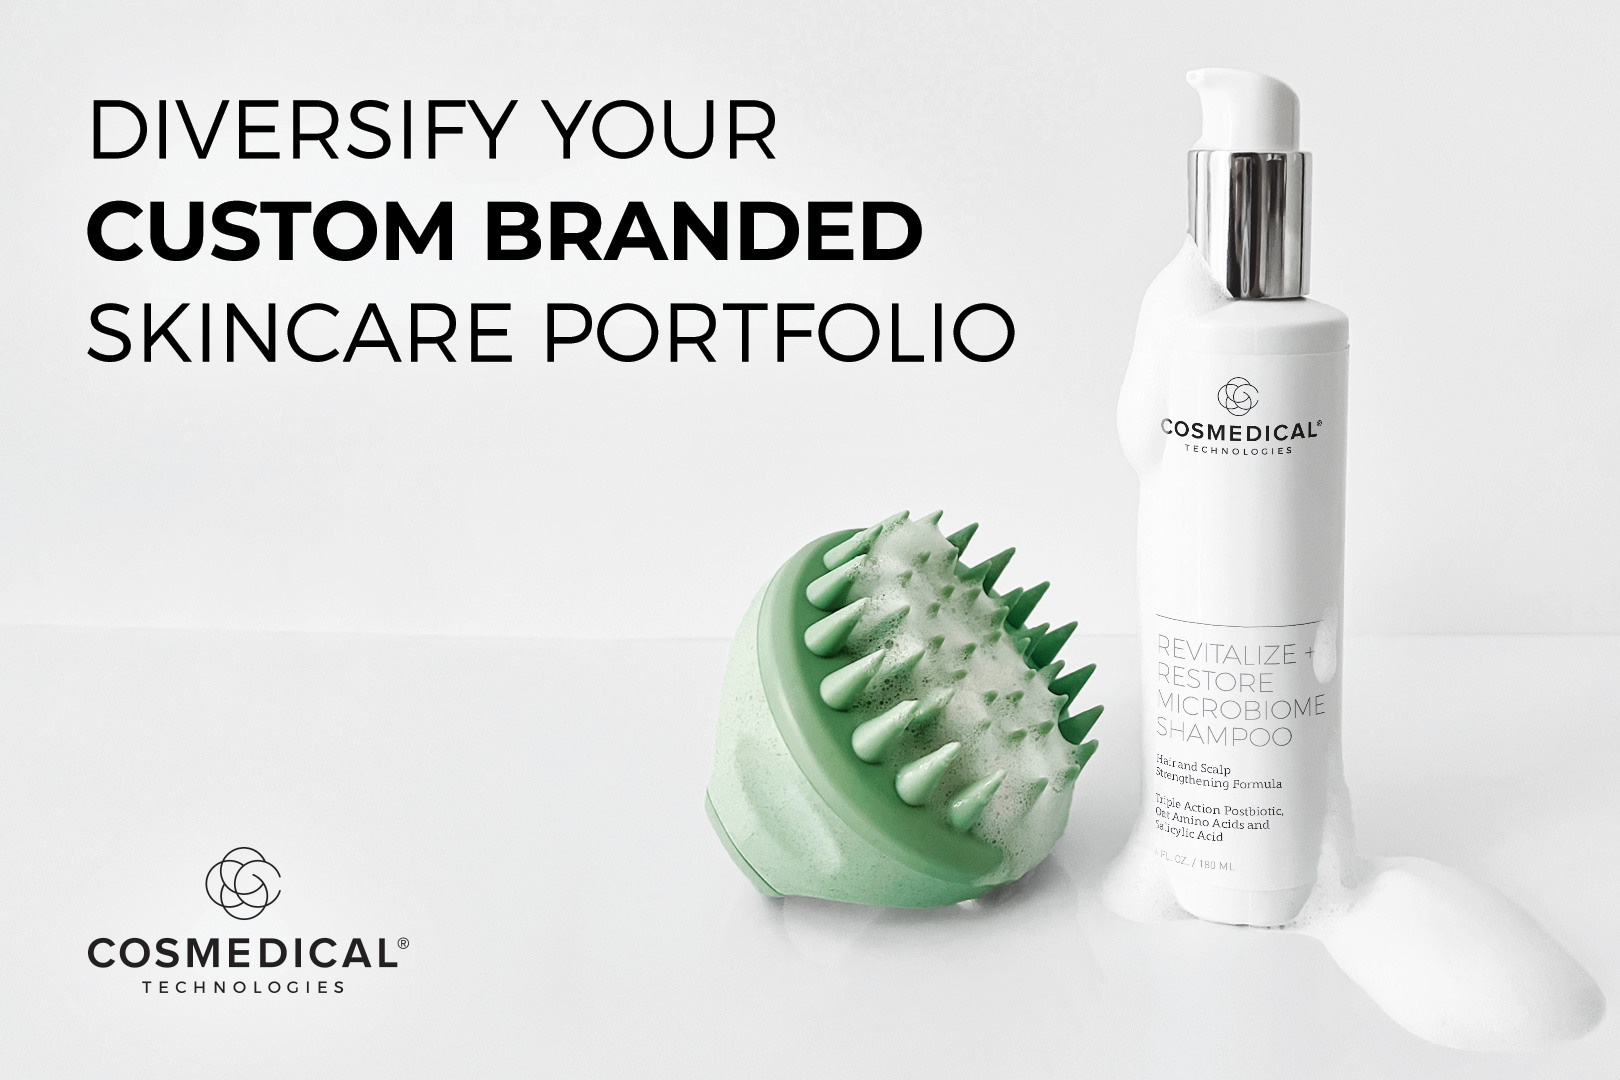 Revitalize + Restore Microbiome Shampoo from CosMedical Technologies. Diversify your custom branded skincare portfolio